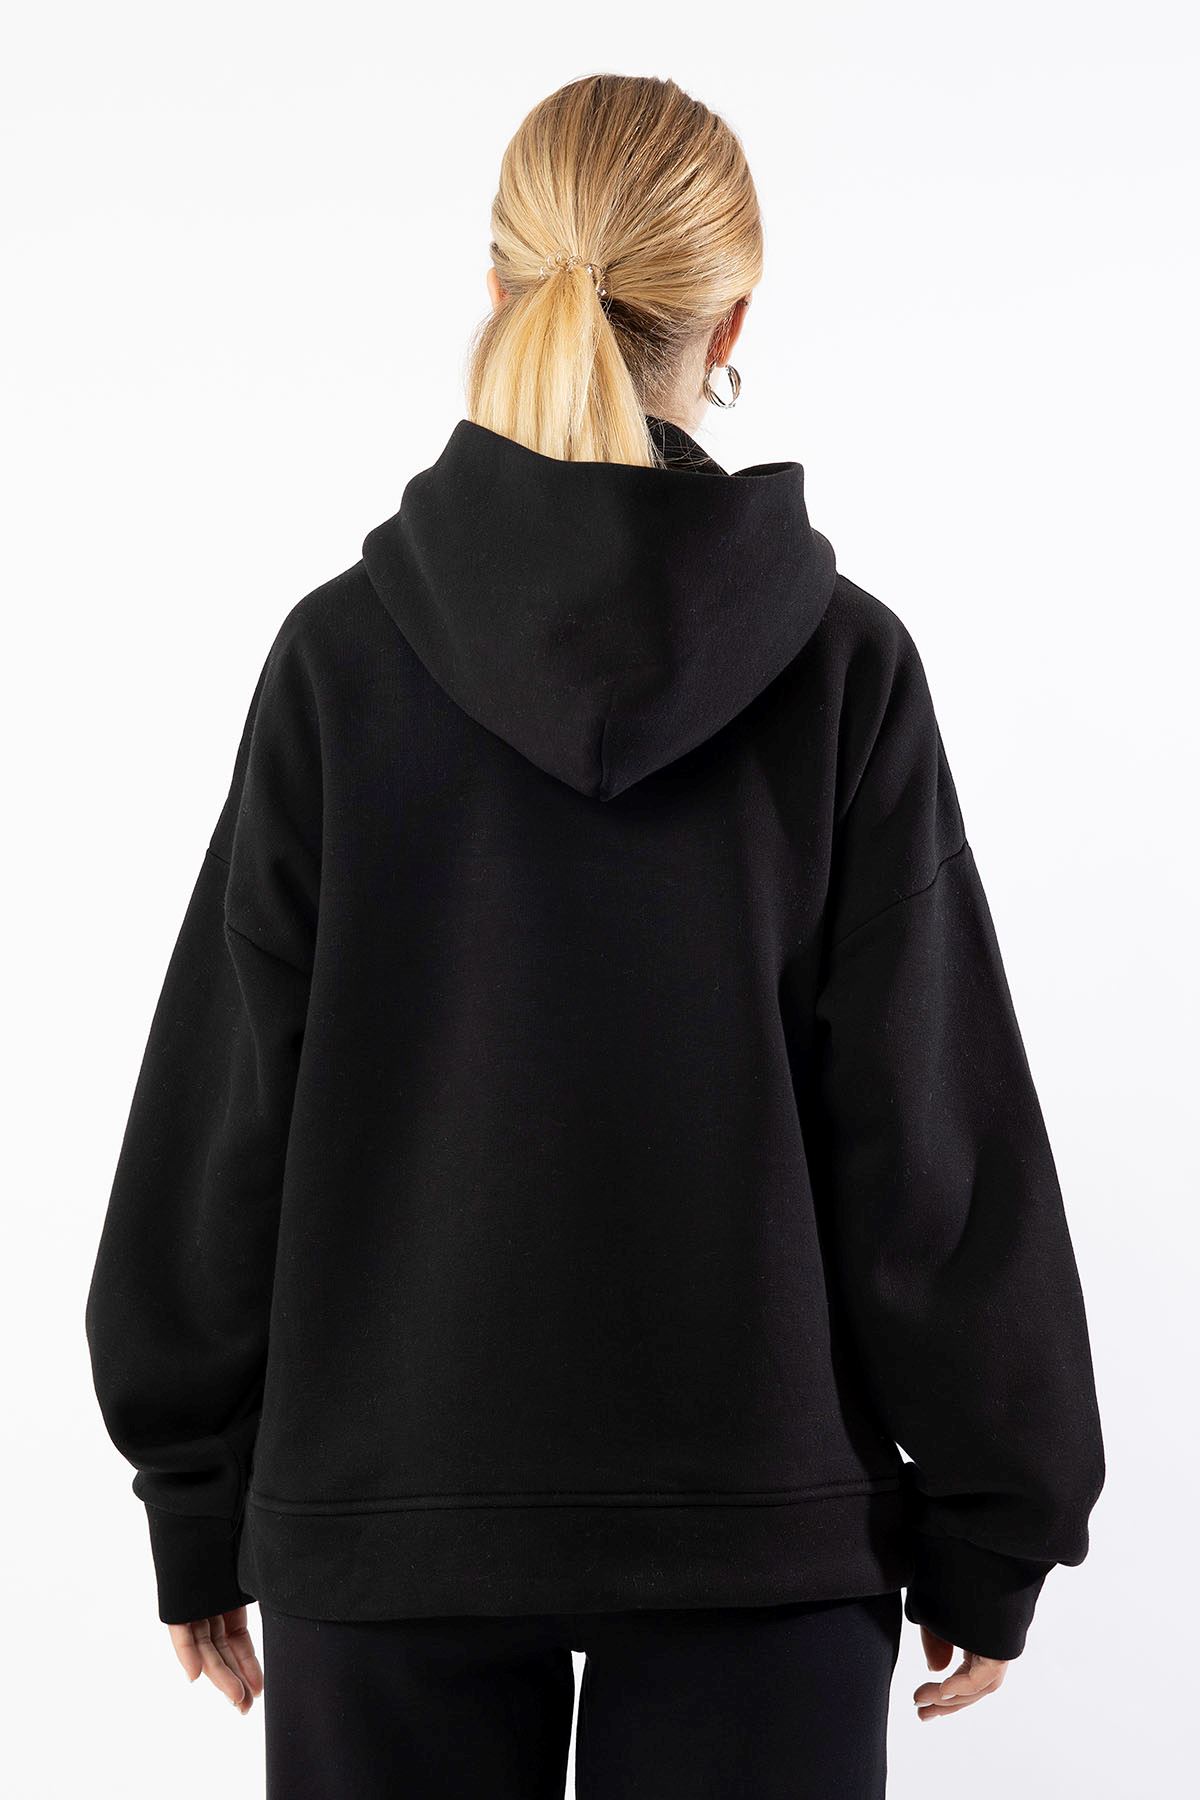 Third Knit Fabric Hooded Below The Hip Oversize Button Women Sweatshirt - Black